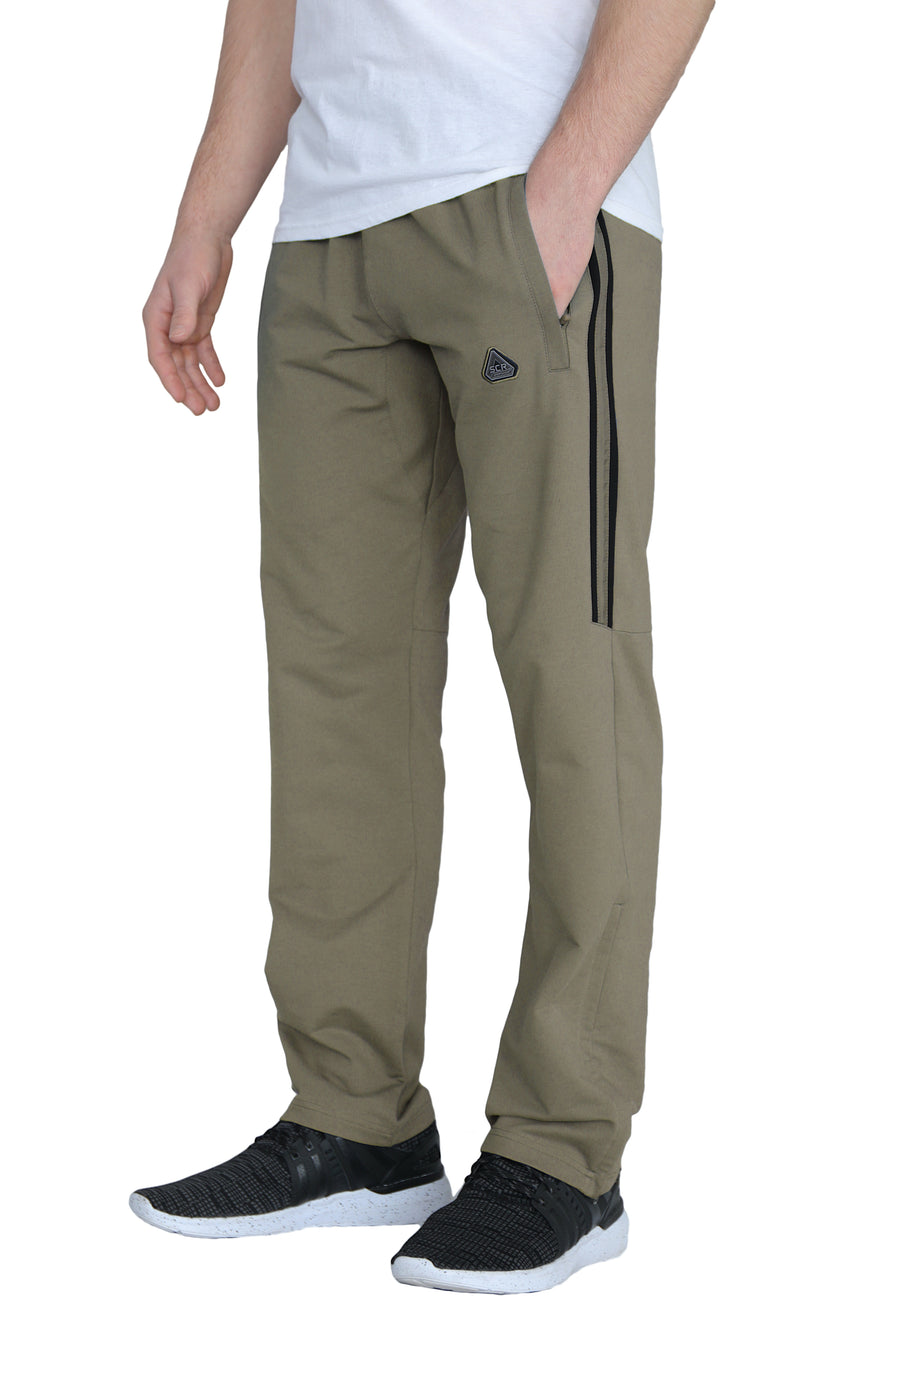 SCR SPORTSWEAR Men's Workout Activewear Pants Athletic Sweatpants Long  Inseam 30L 32L 34L 36L 38L (34W X 34L, Light Grey Heather-K434)